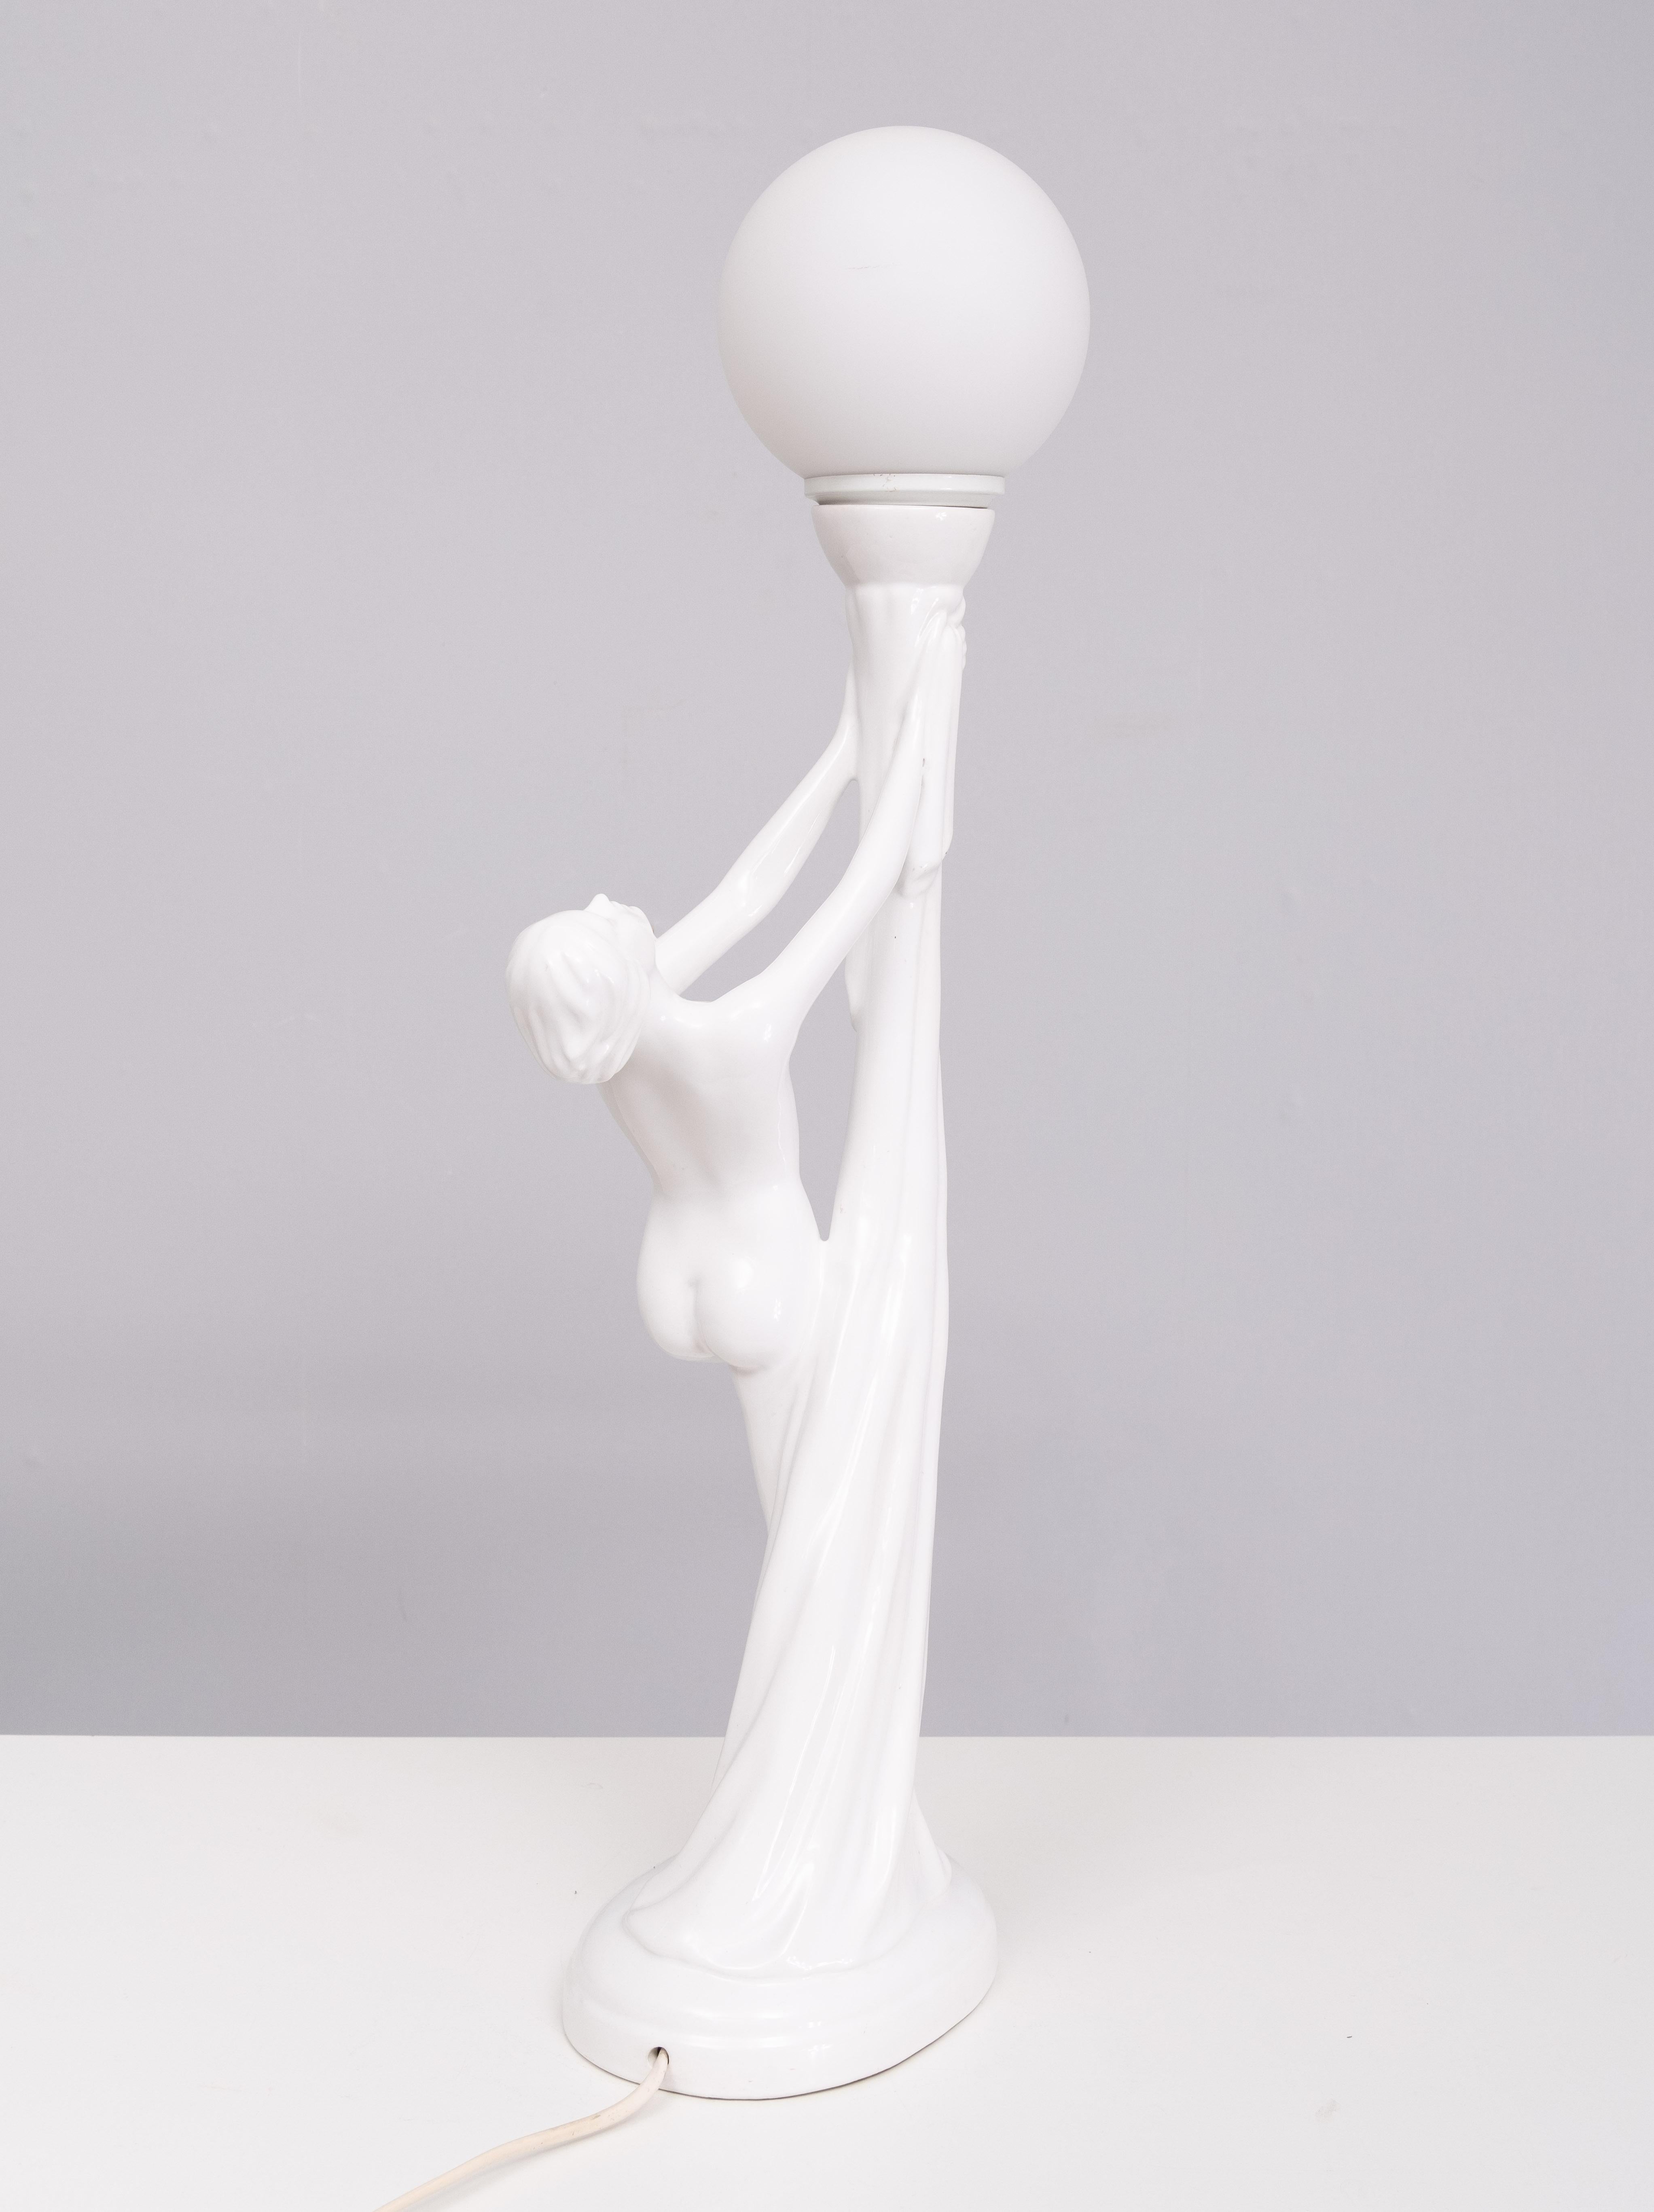  Art Deco  White Ceramic naked Woman lamp  Globe  Italy  1970s For Sale 2